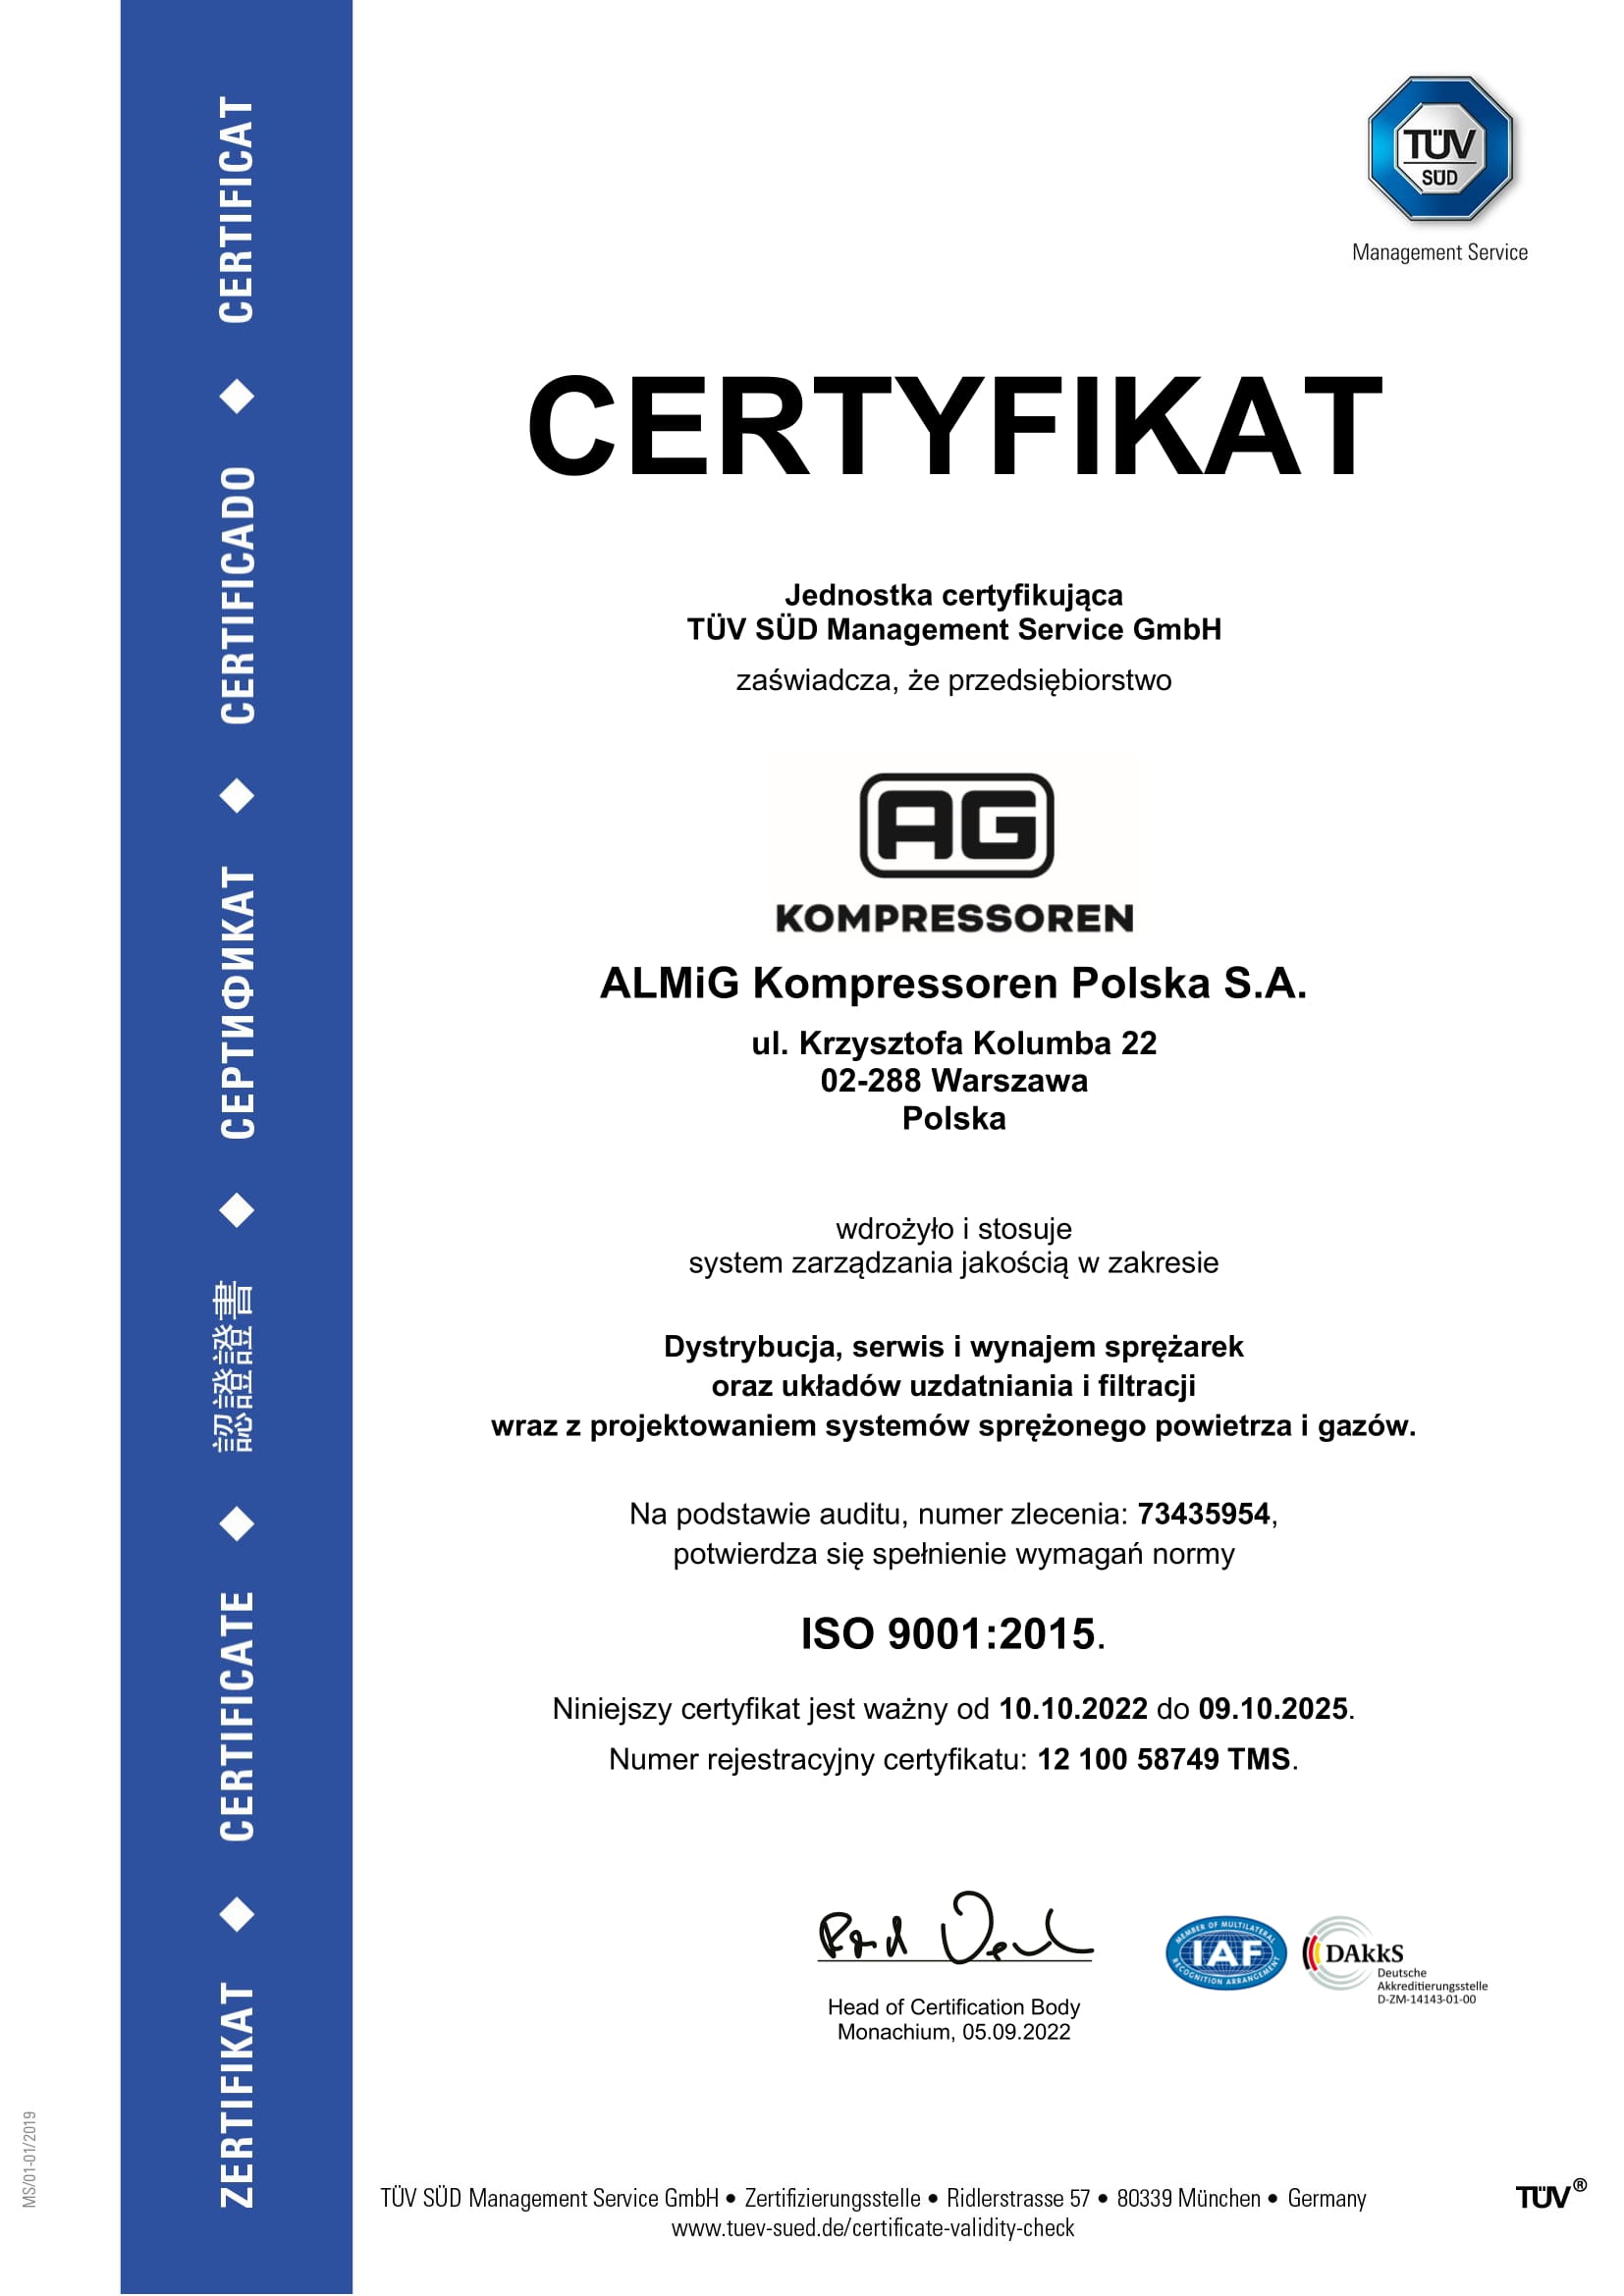 Almig certyfikat ISO